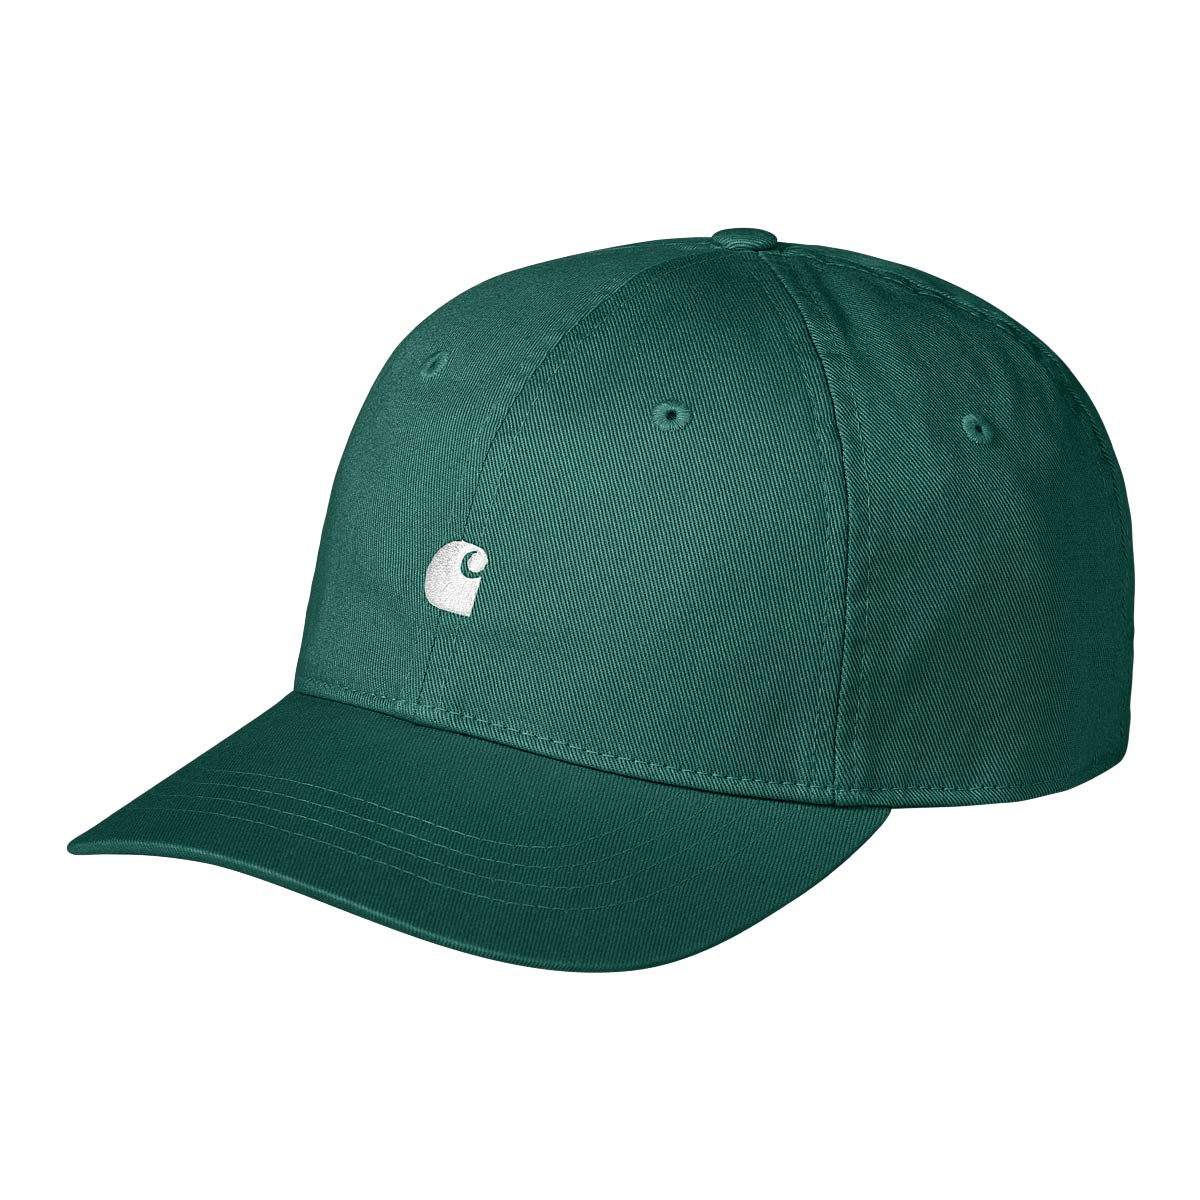 Carhartt Wip Madison Logo Cap, Light Green/white